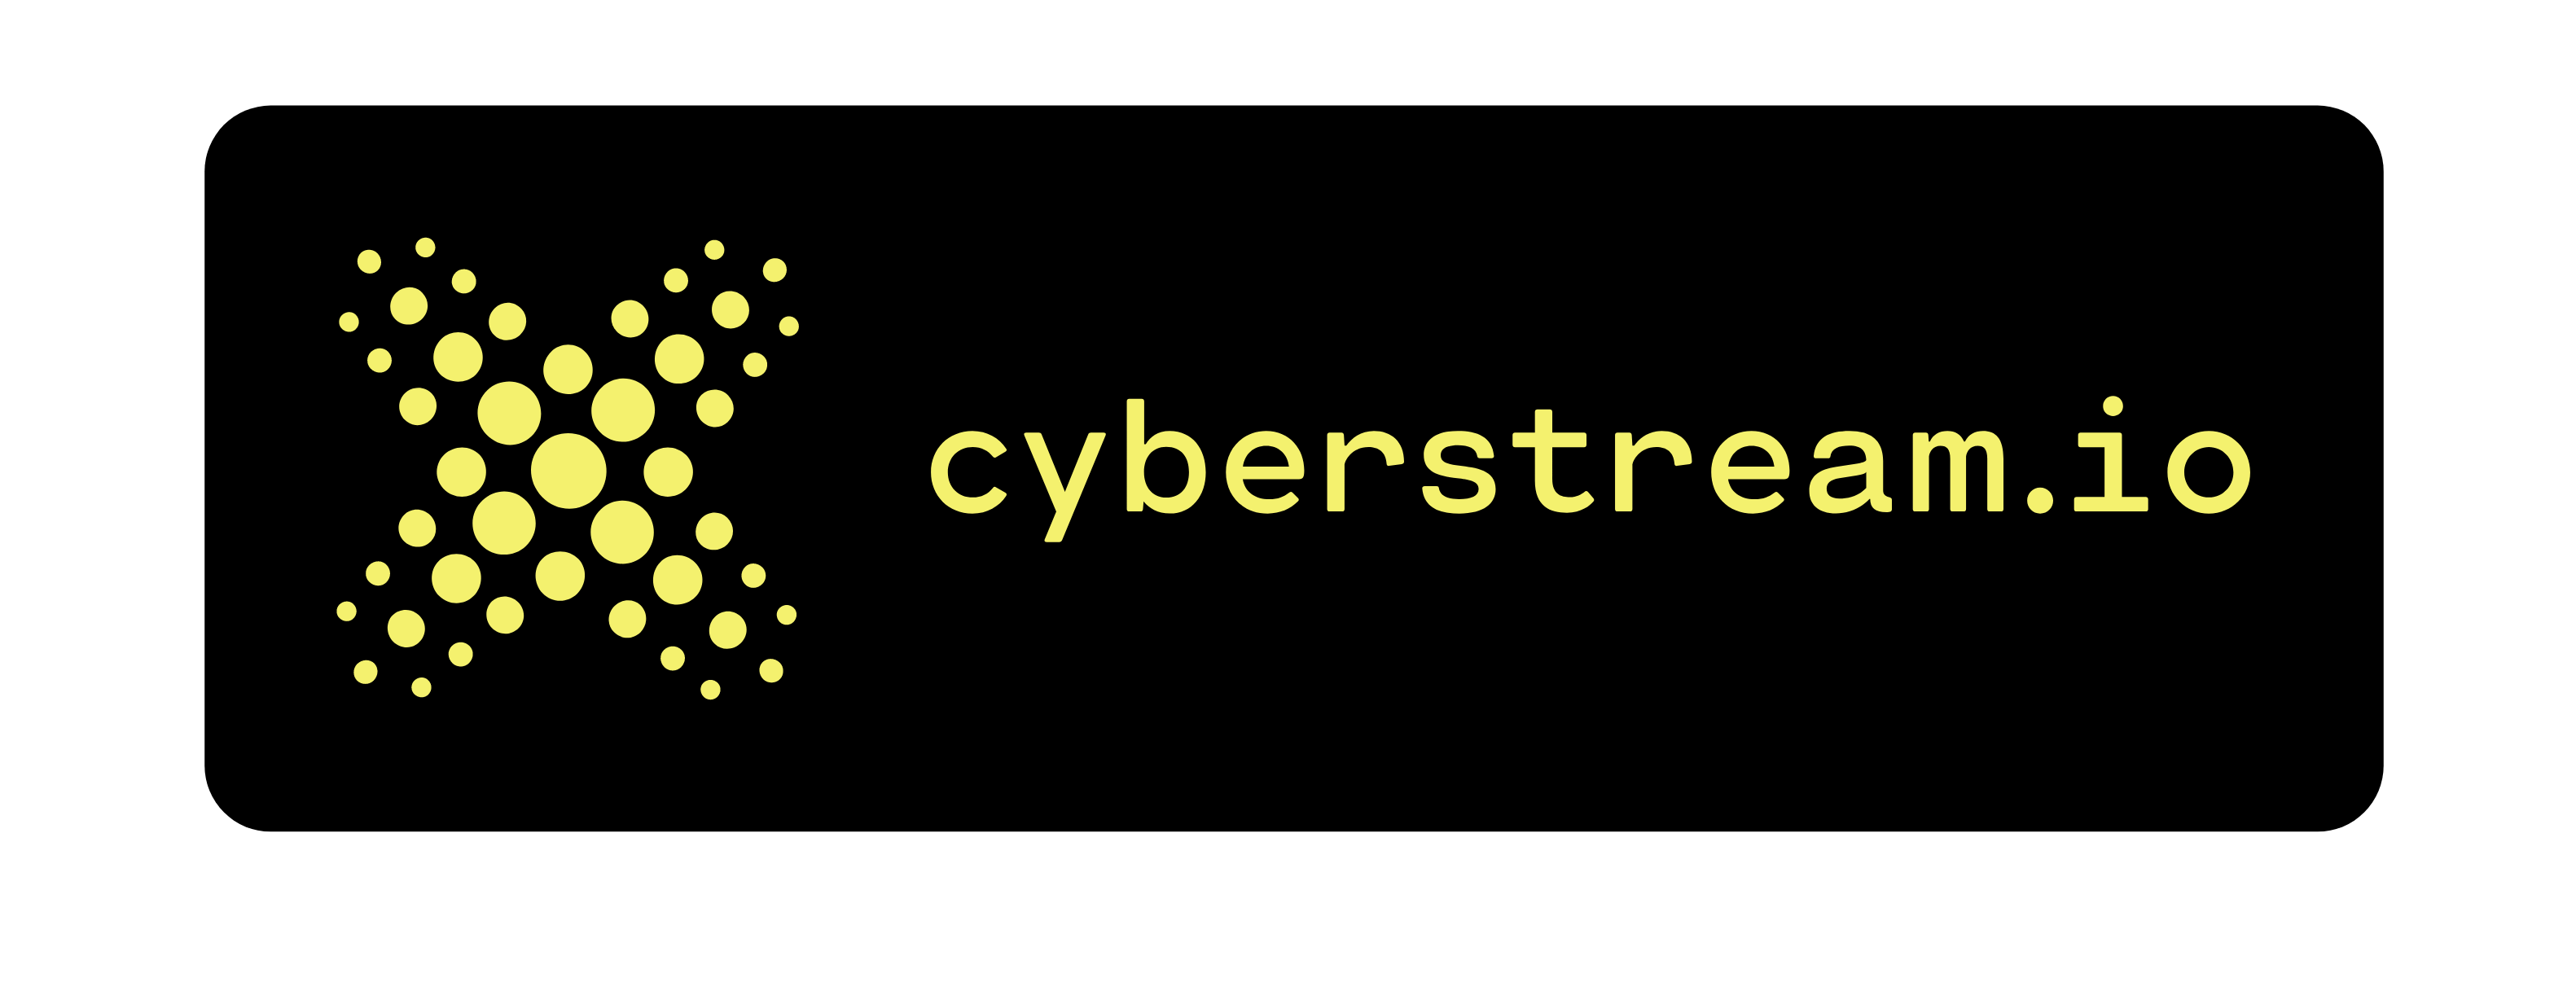 cyberstream.io-logo-black